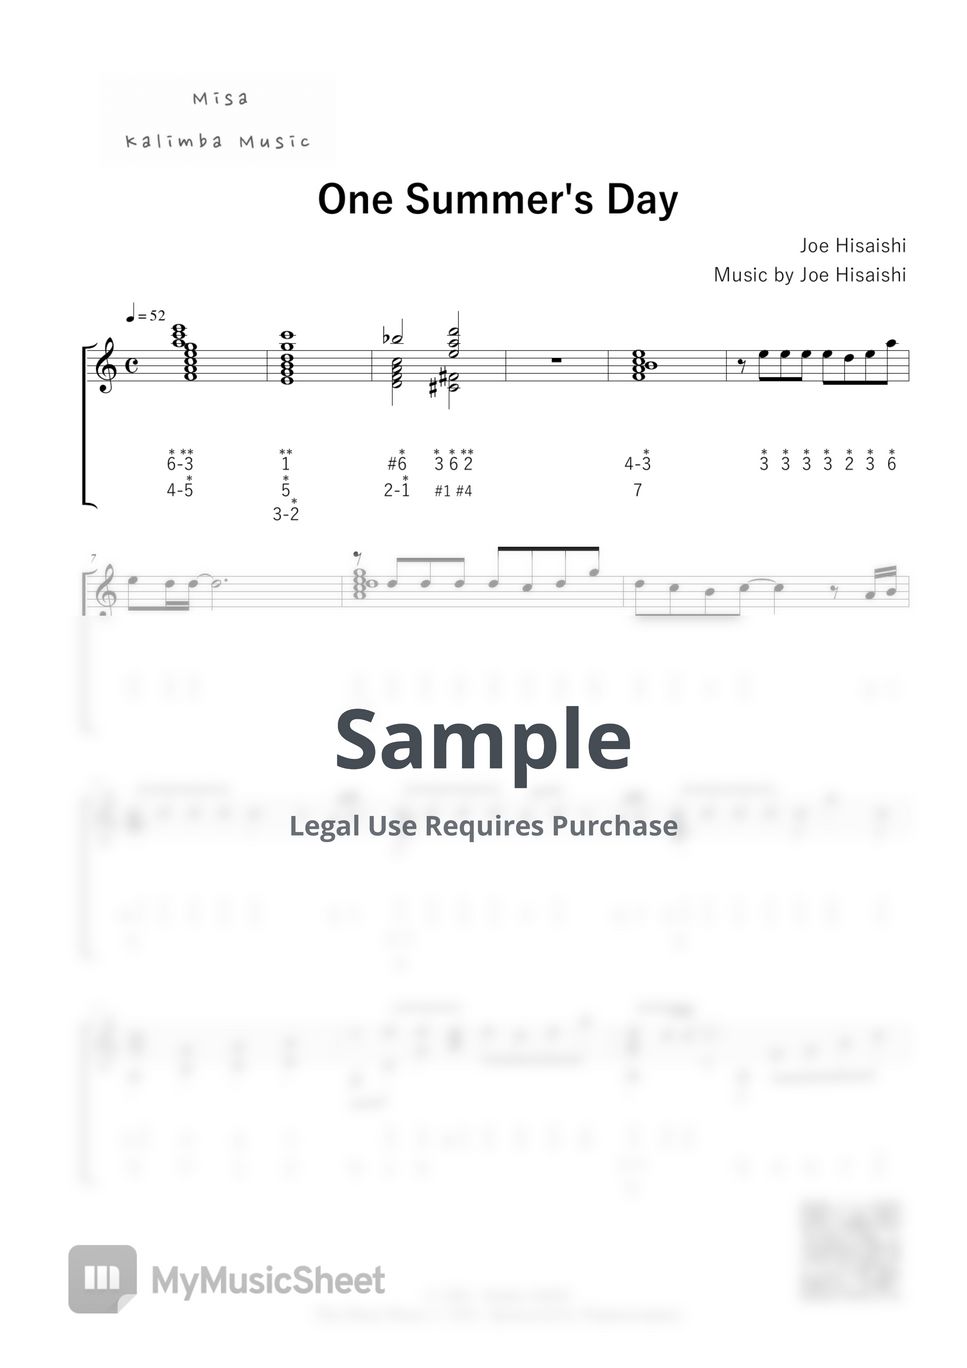 Joe Hisaishi - One Summer's Day / 34 keys kalimba / Number Notation by Misa / Kalimba Music